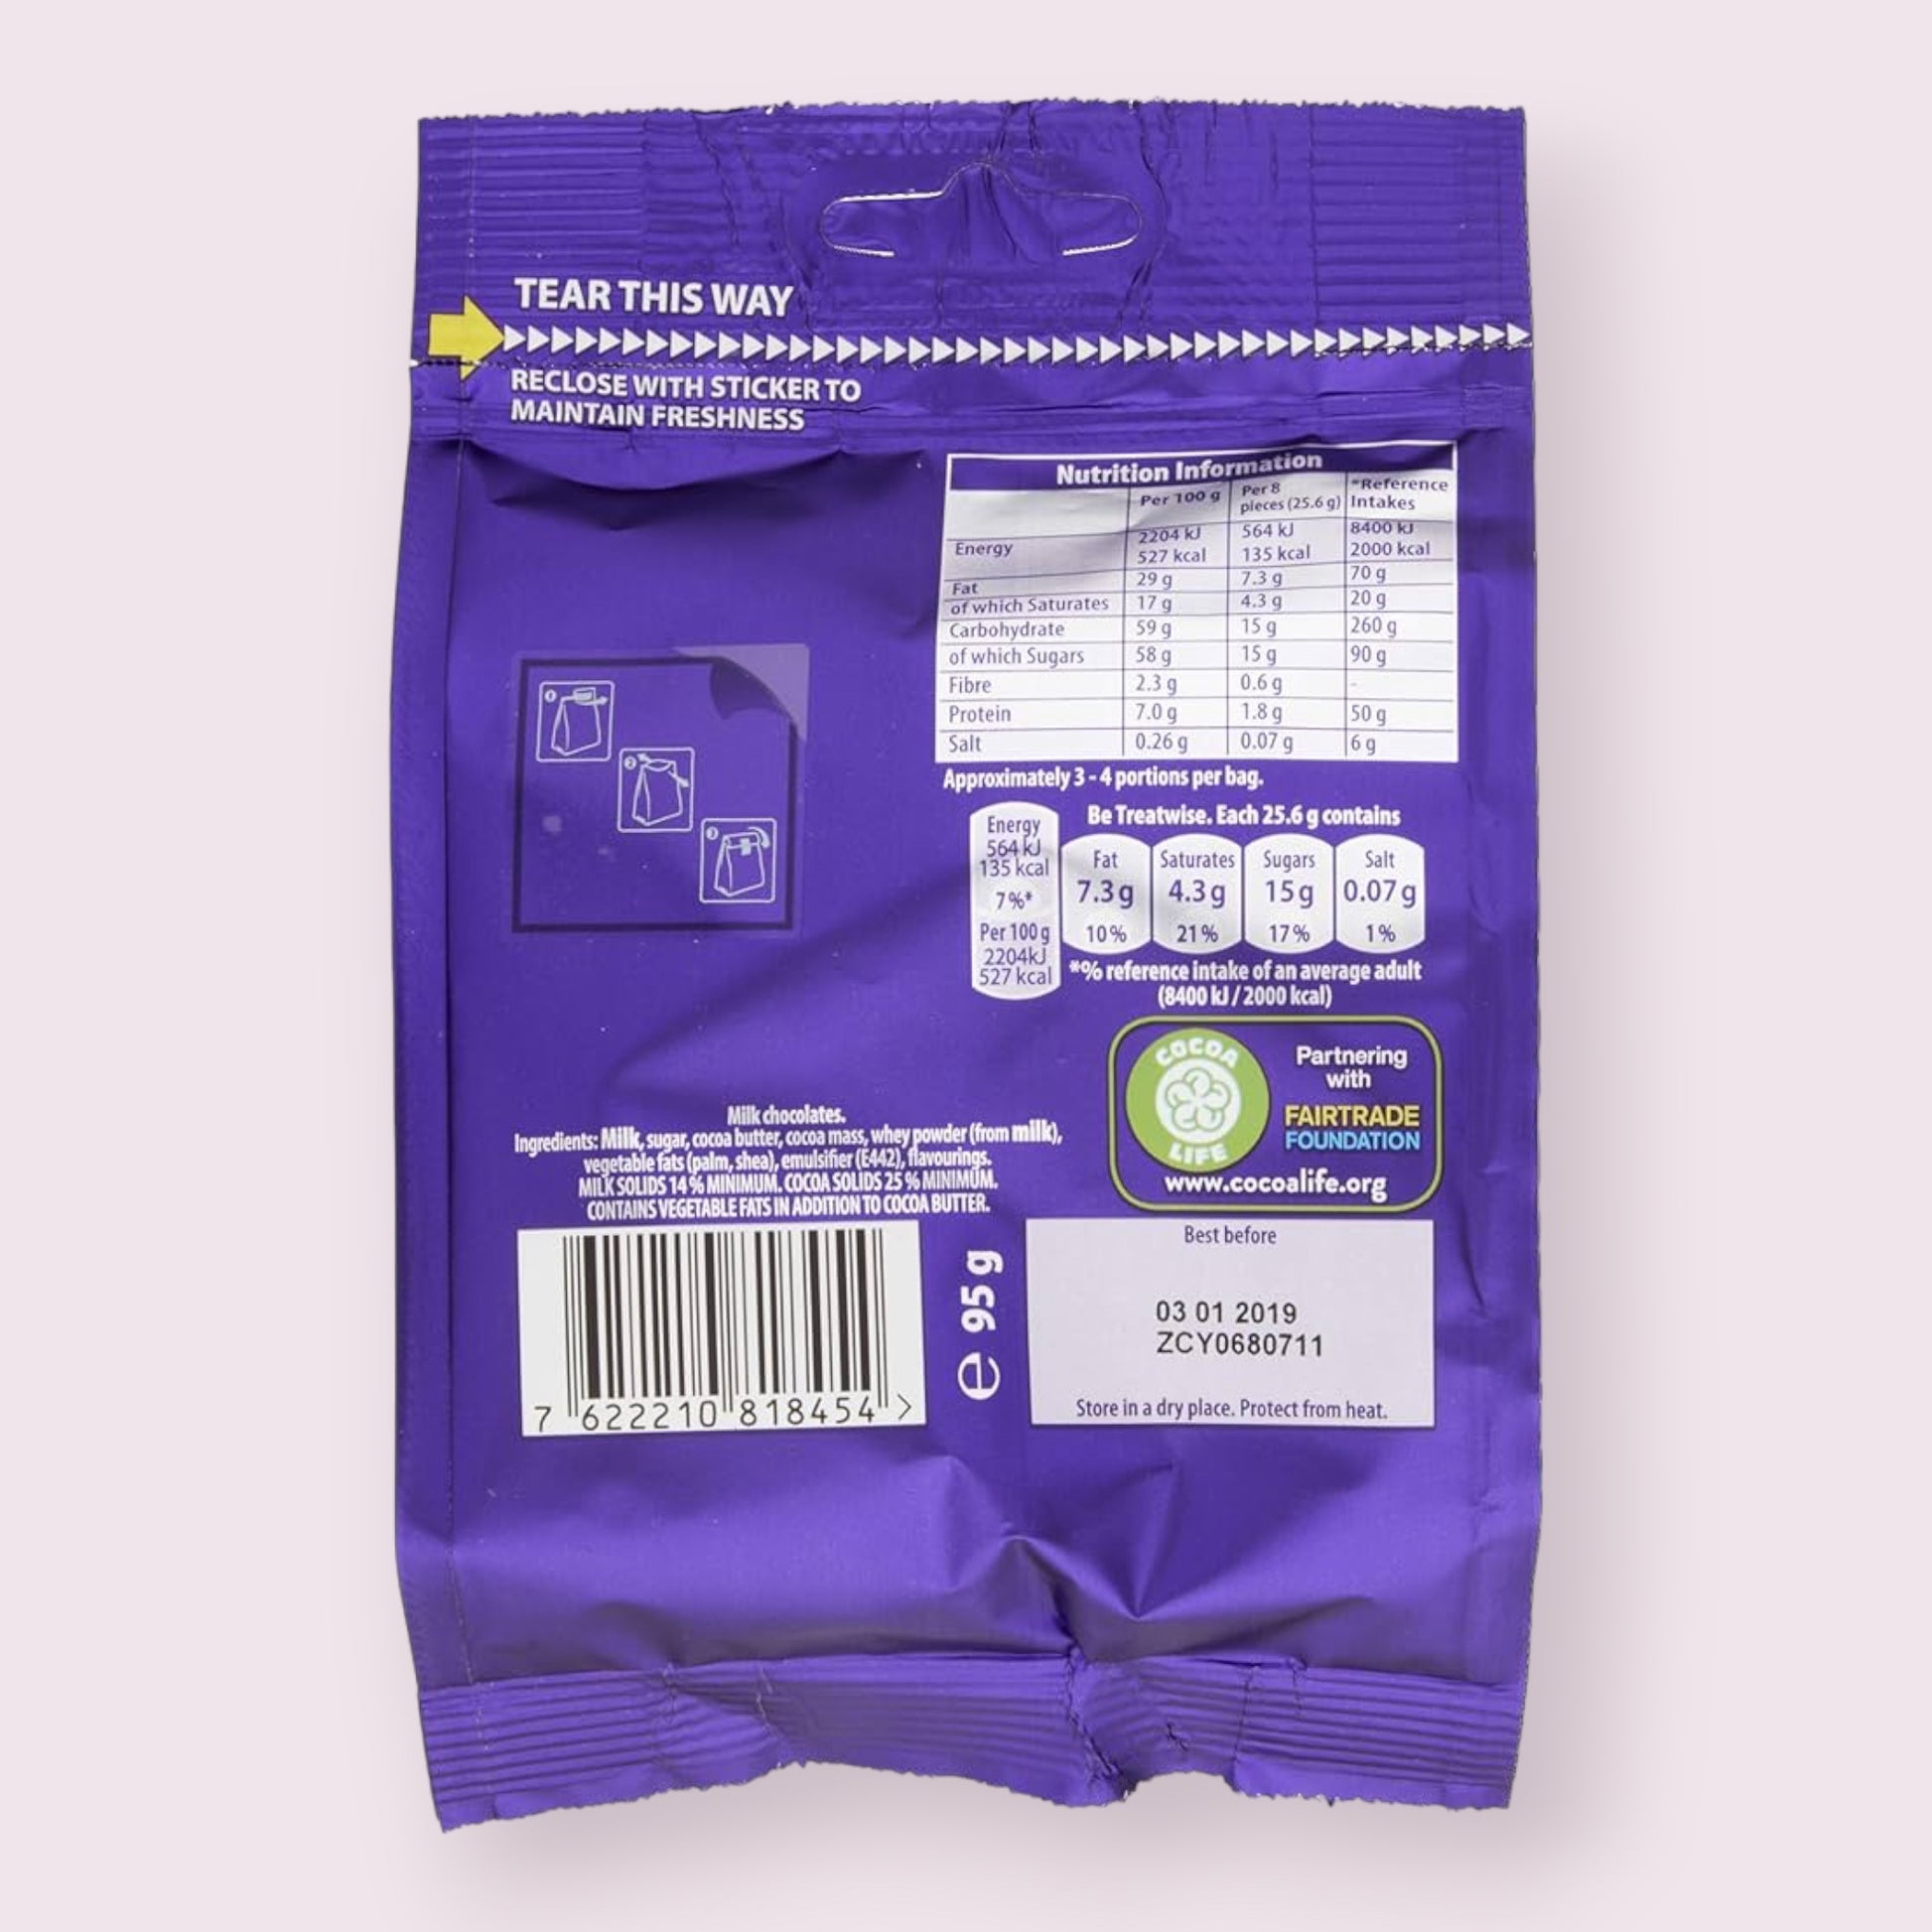 Cadbury's Twirl Bites Bag  Pixie Candy Shoppe   